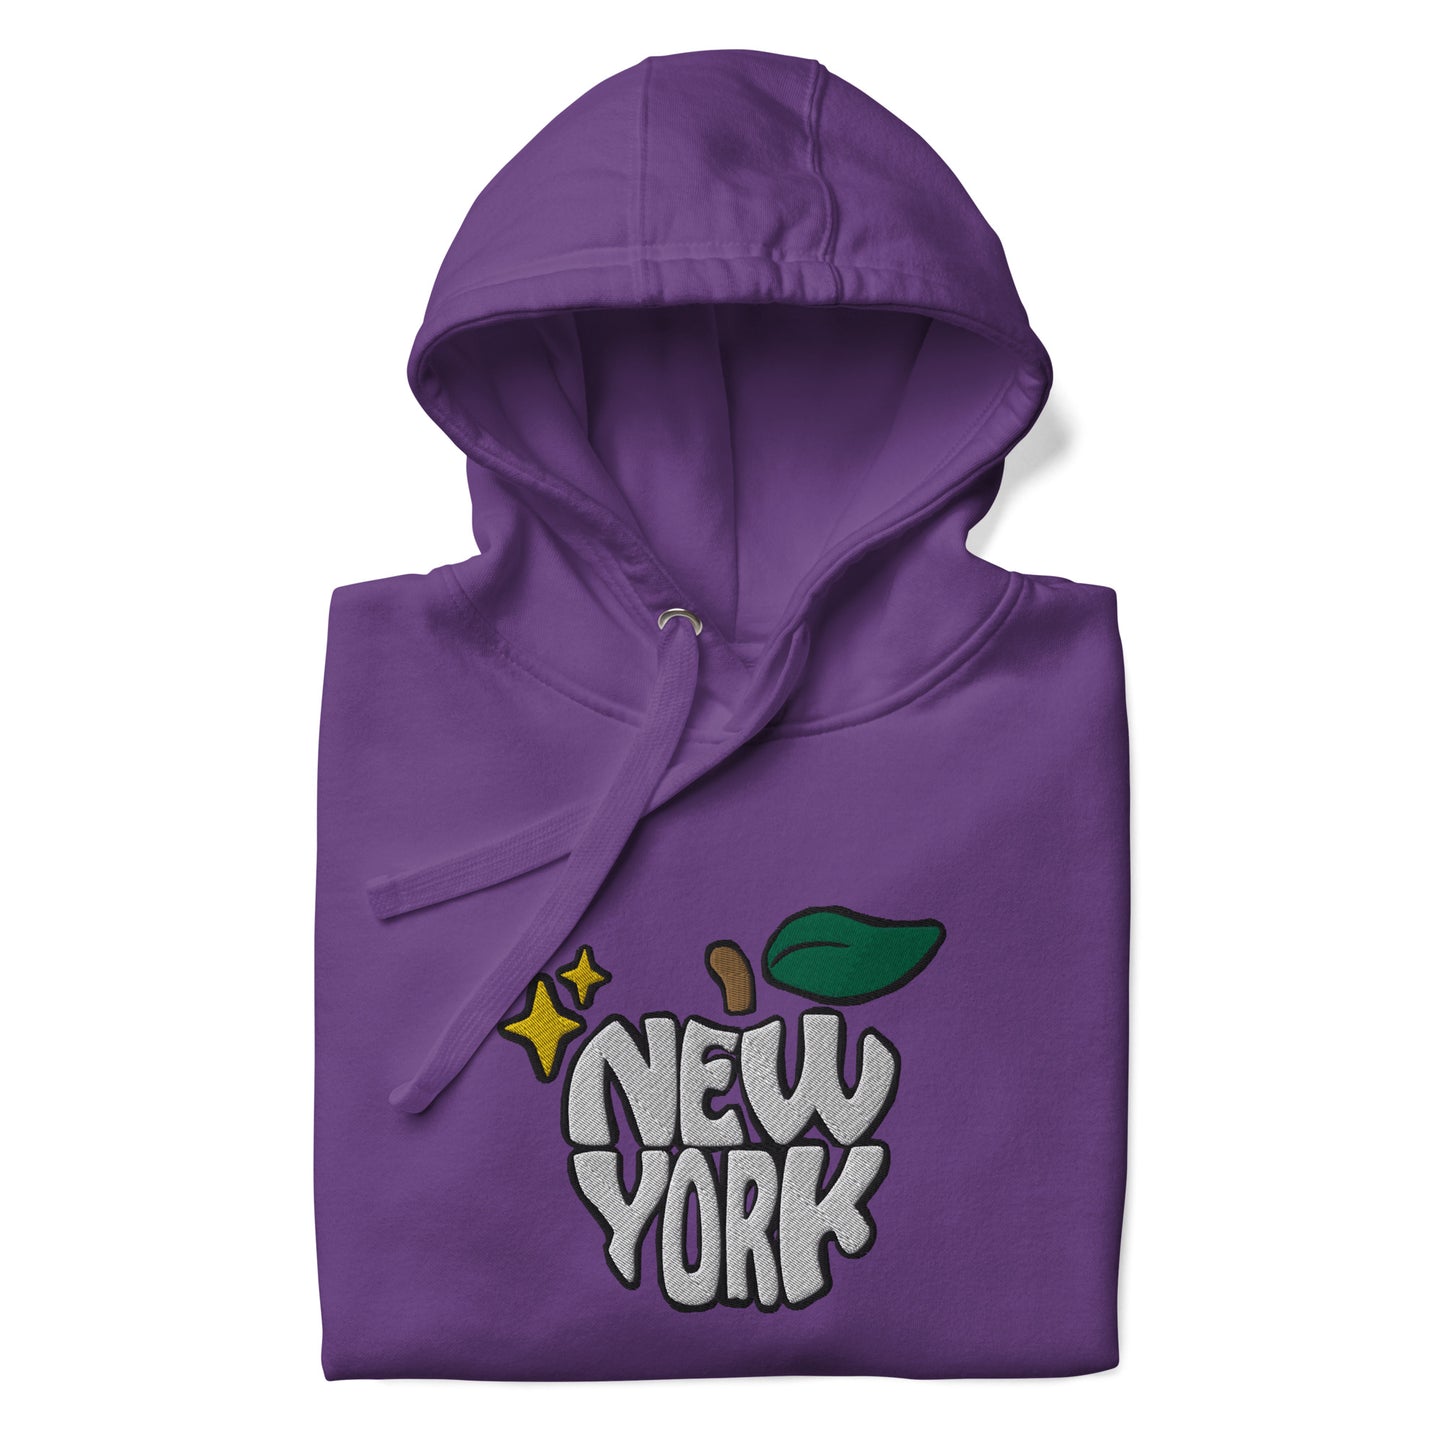 New York Apple Logo Embroidered Premium Hoodie Sweatshirt